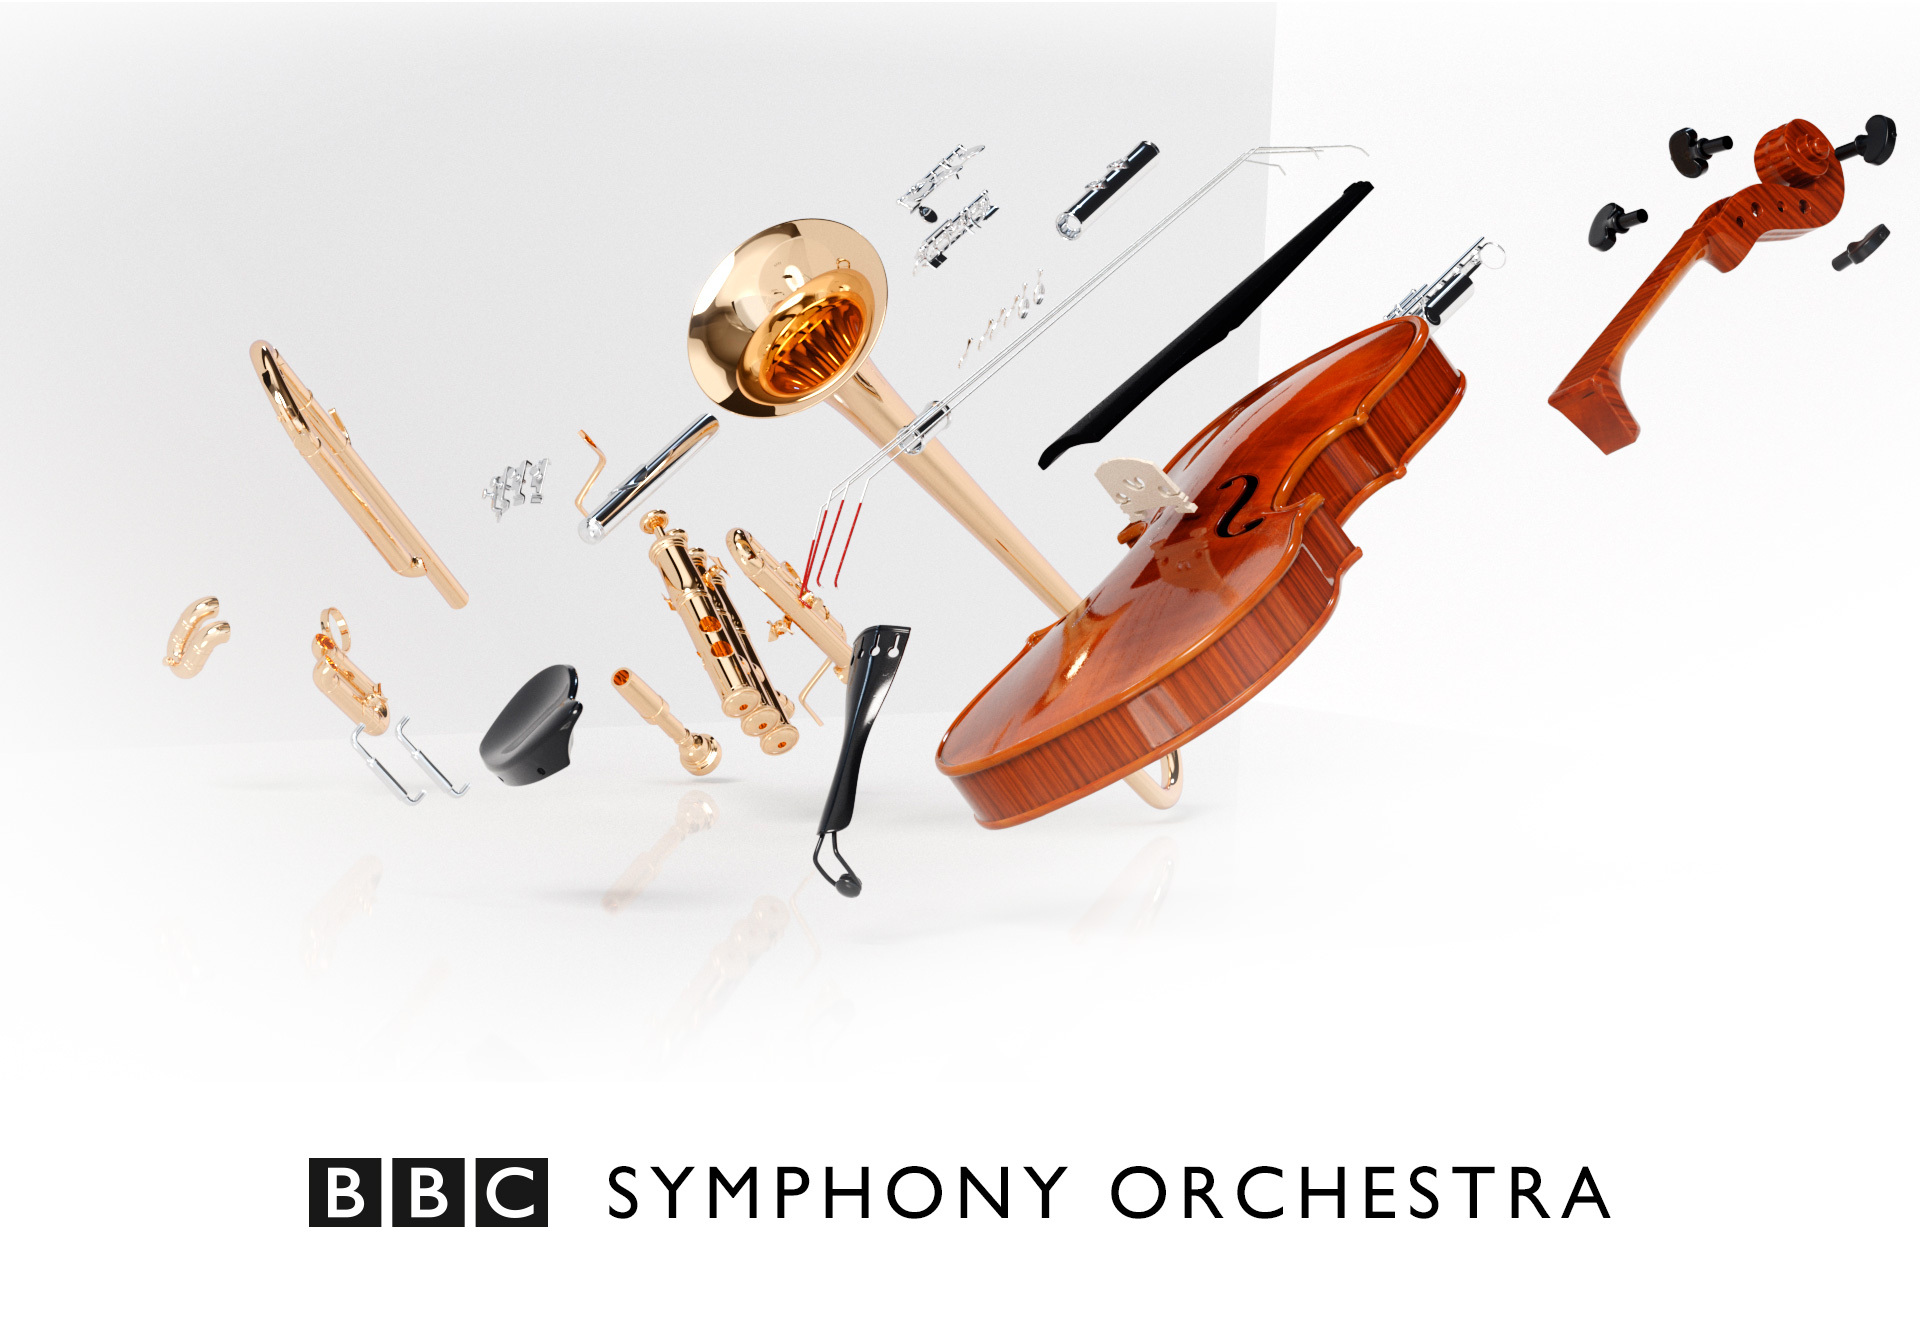 symphonia orchestra vst free